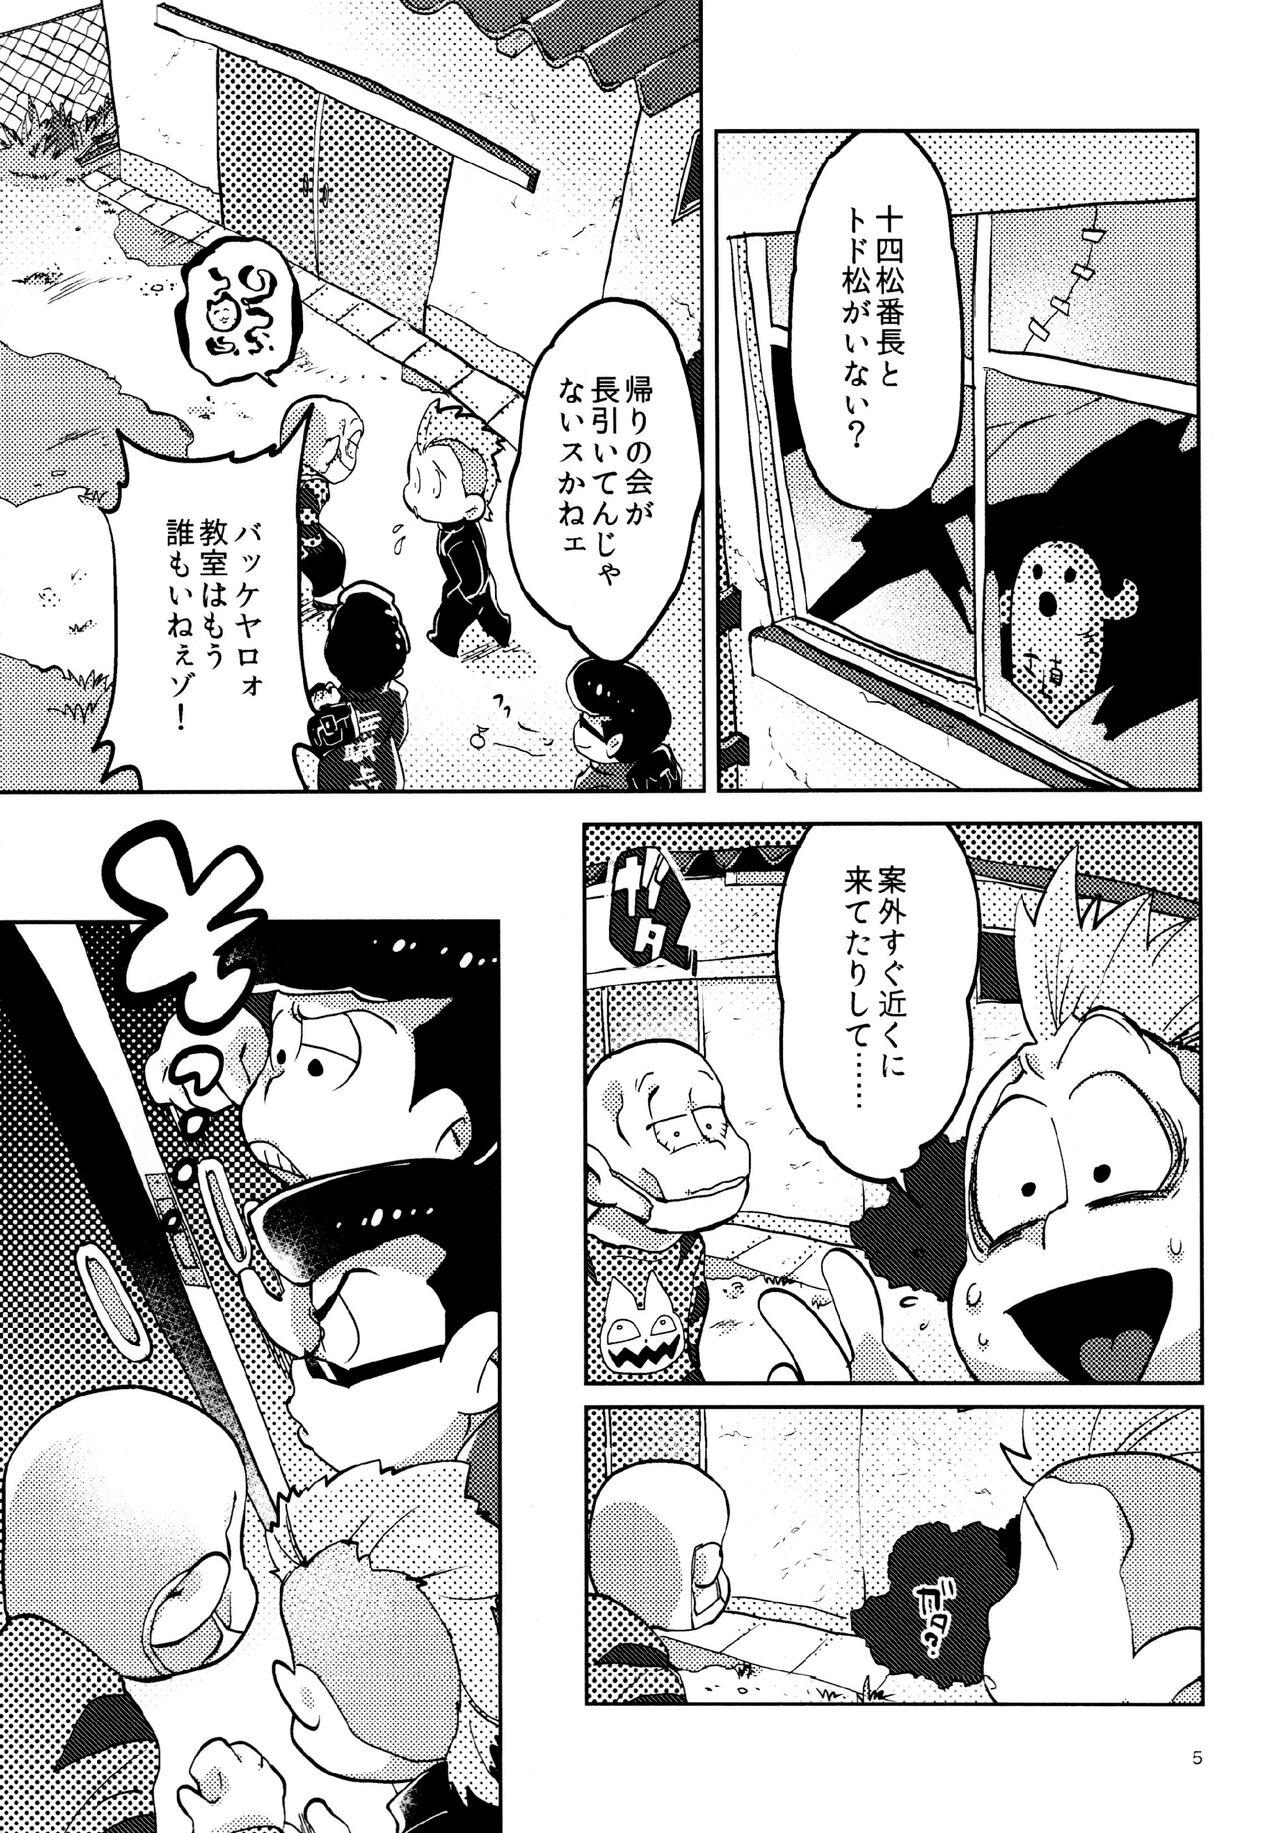 Gay Medical Amaebitamago (gyuunyuu) gaman joutou airabuyuu (Osomatsu-san) - Osomatsu san Parody - Page 5